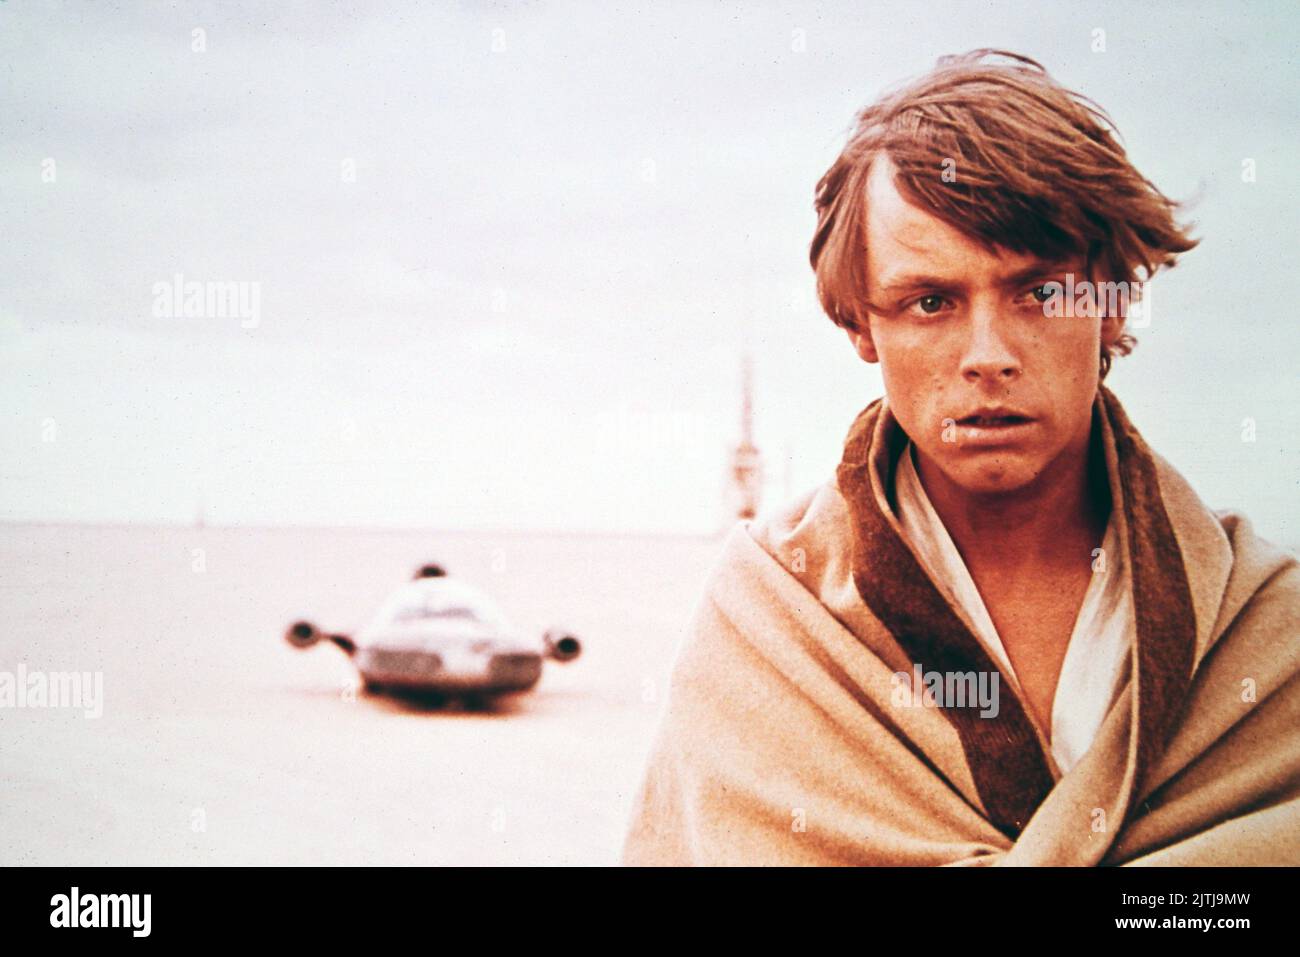 Star Wars, aka Krieg der Sterne, USA 1977, Regie: George Lucas, Charakter: Mark Hamill als Luke Skywalker Stock Photo